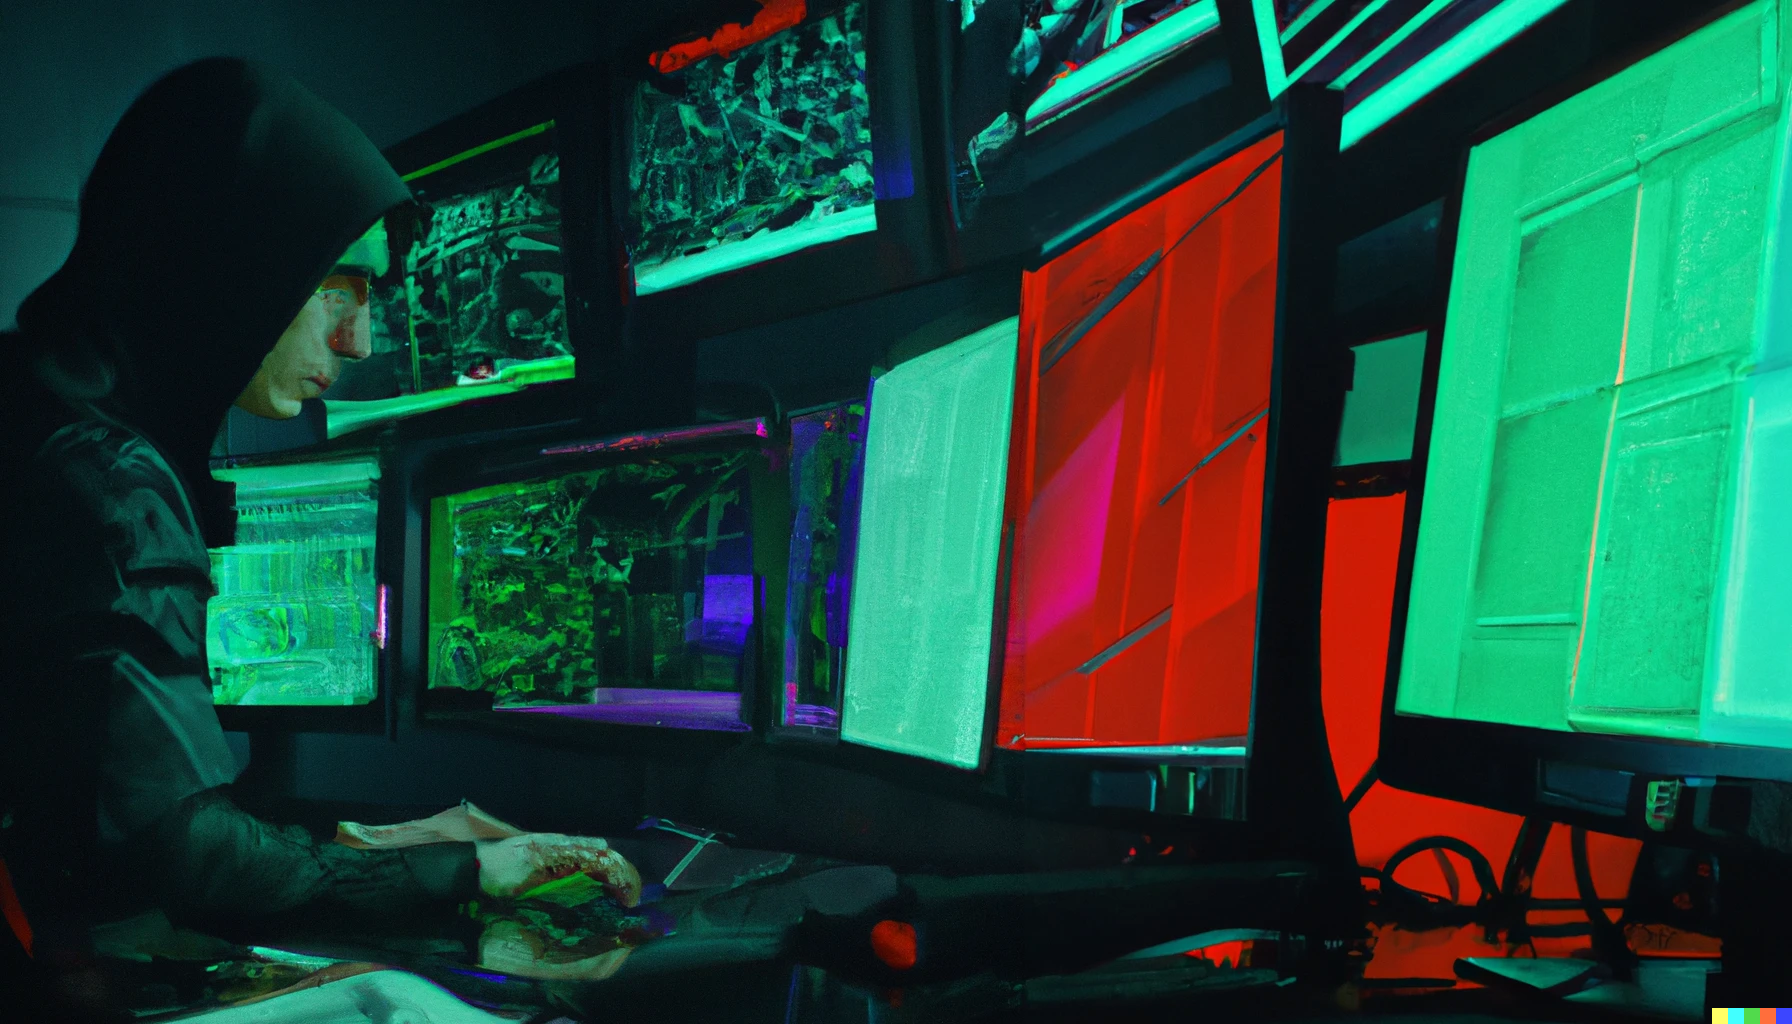 Image générée via Dall-E: &quot;A cyberpunk netrunner looking at multiple monitors with terminals, digital art&quot; - DP